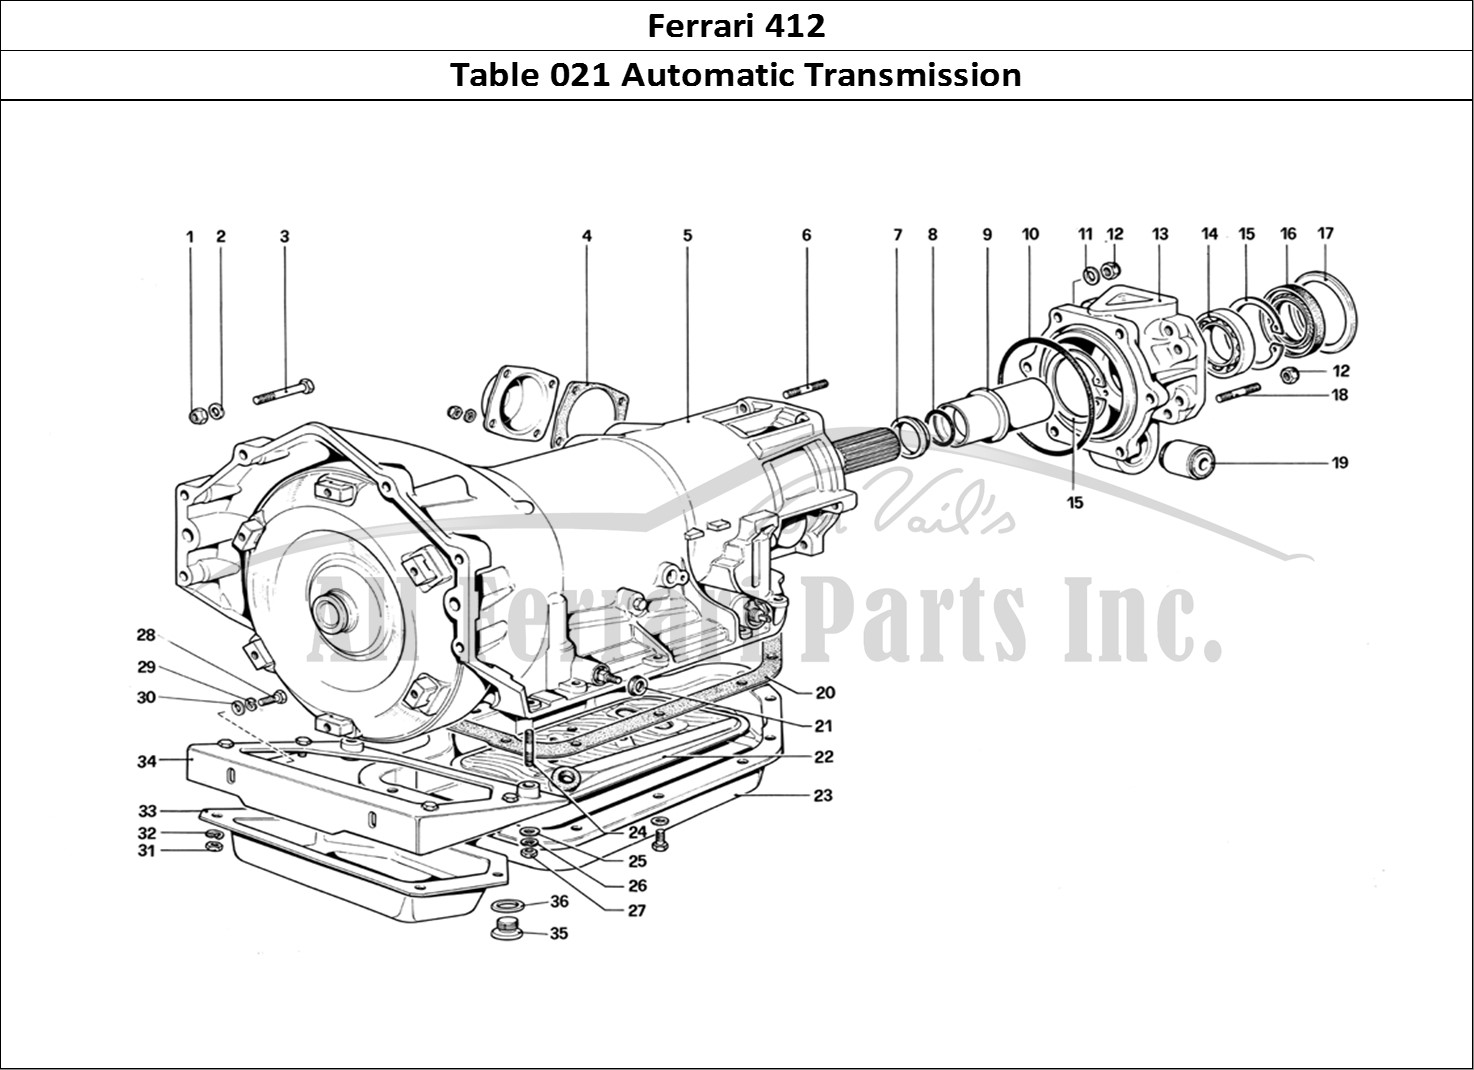 Ferrari Parts Ferrari 412 (Mechanical) Page 021 Automatic Transmission -